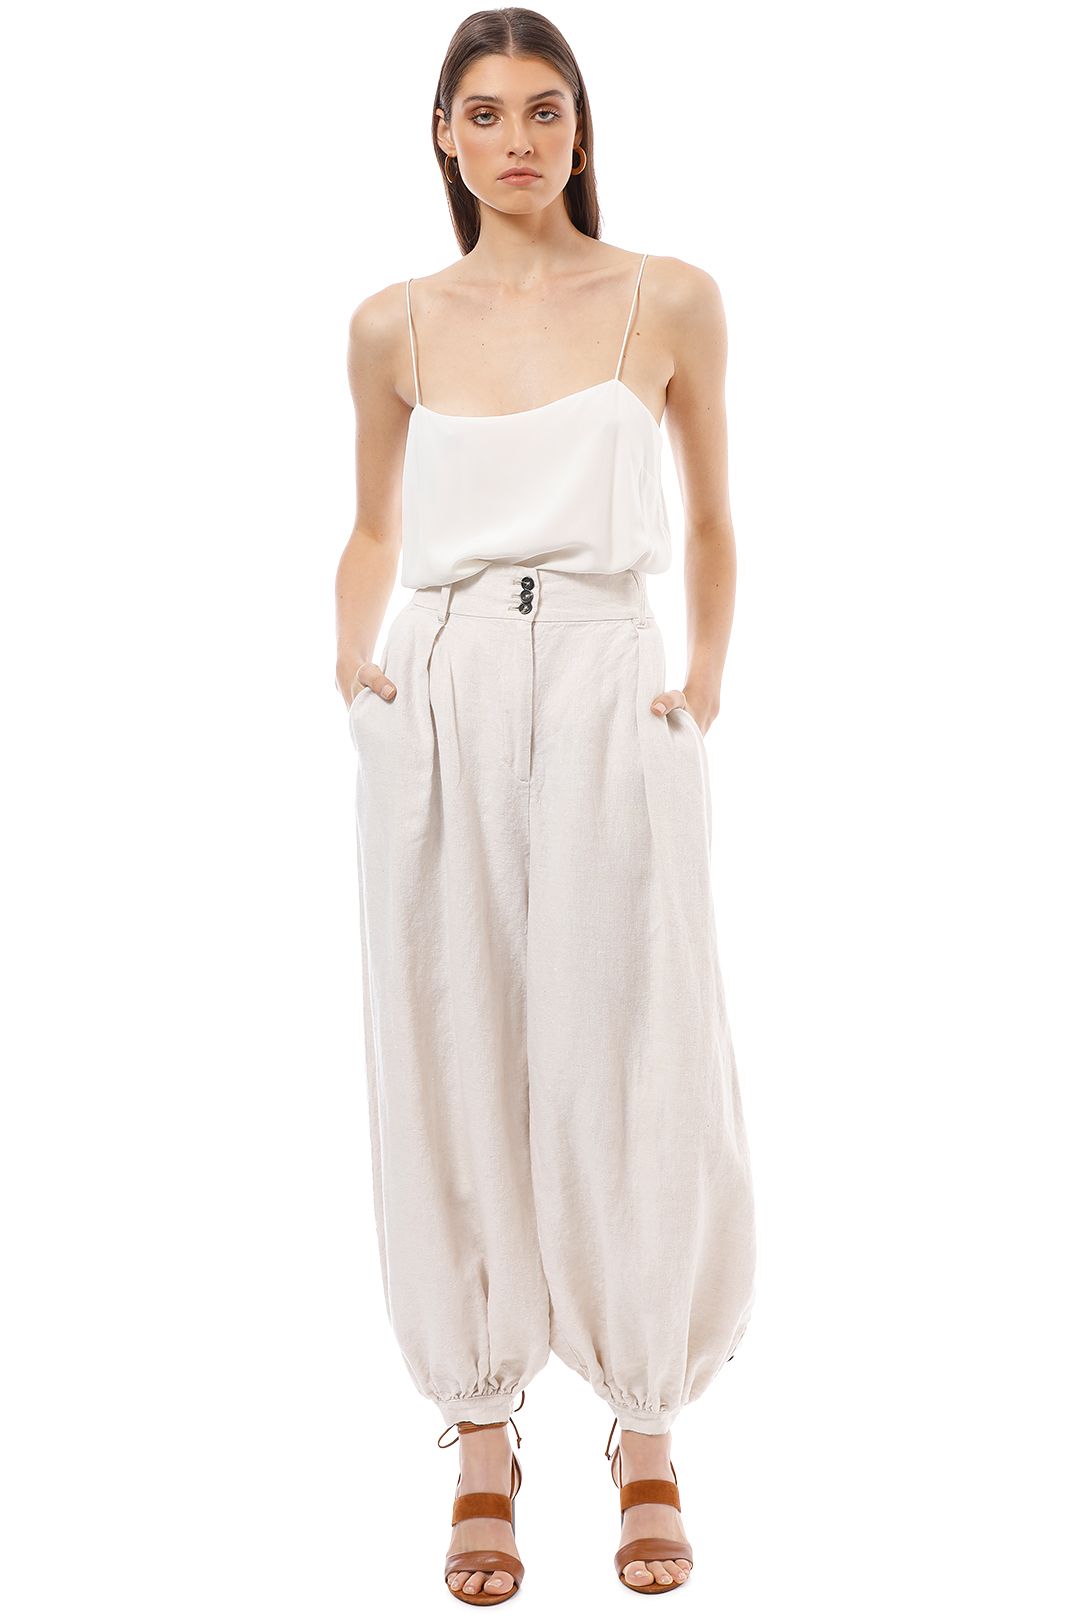 Shona Joy - Linen Tailored Harem Pants with Belt - Natural - Front